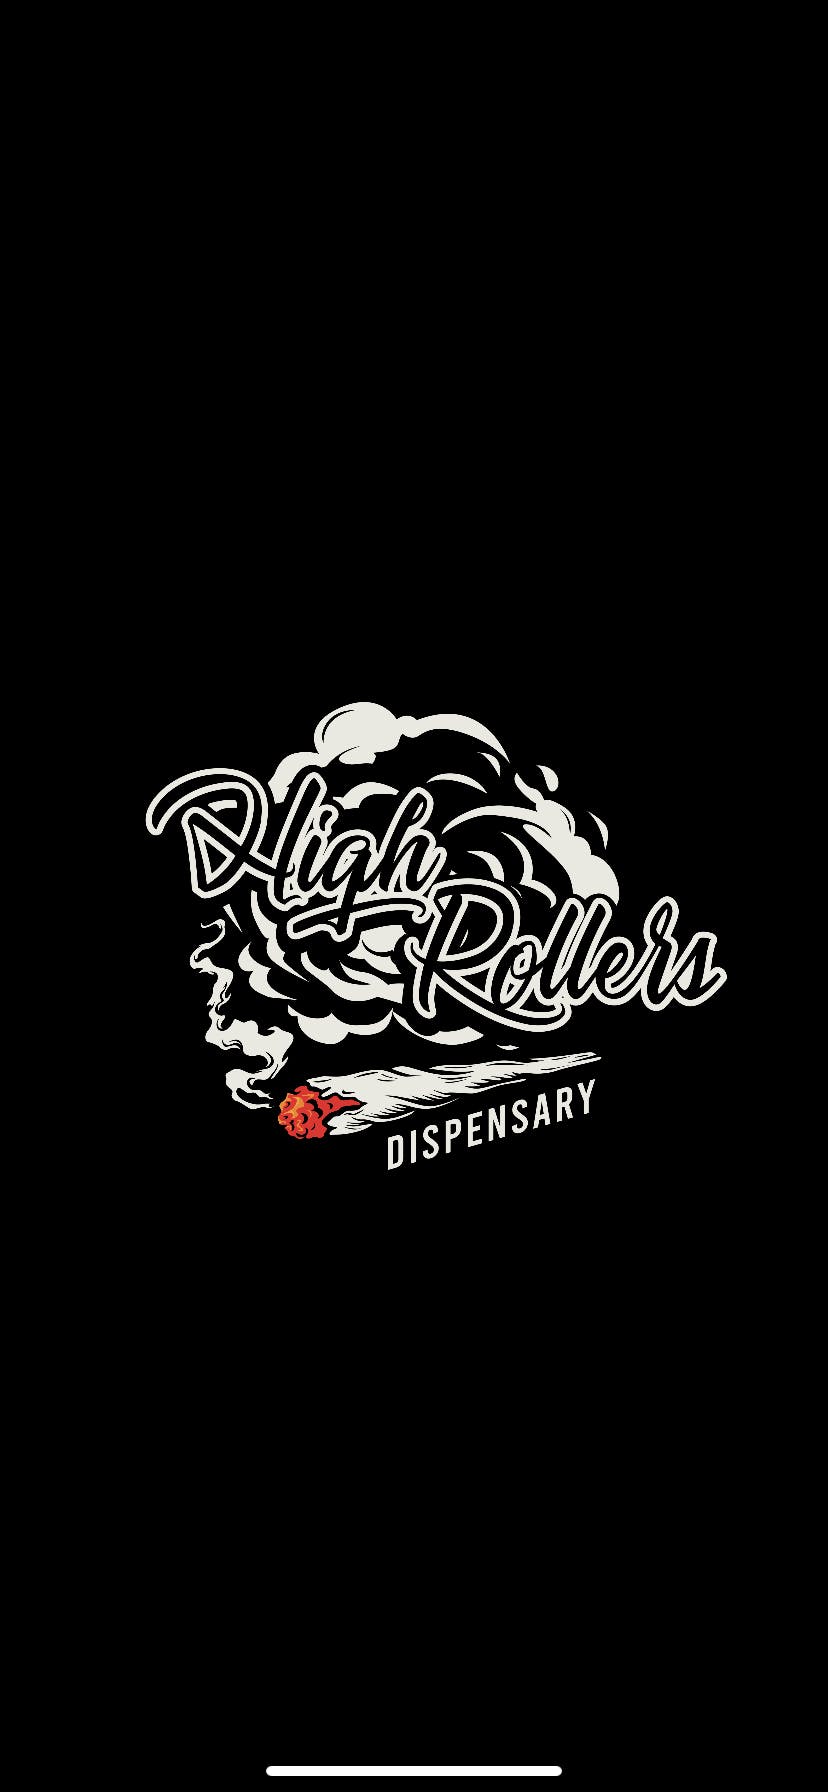 High Rollers Dispensary logo